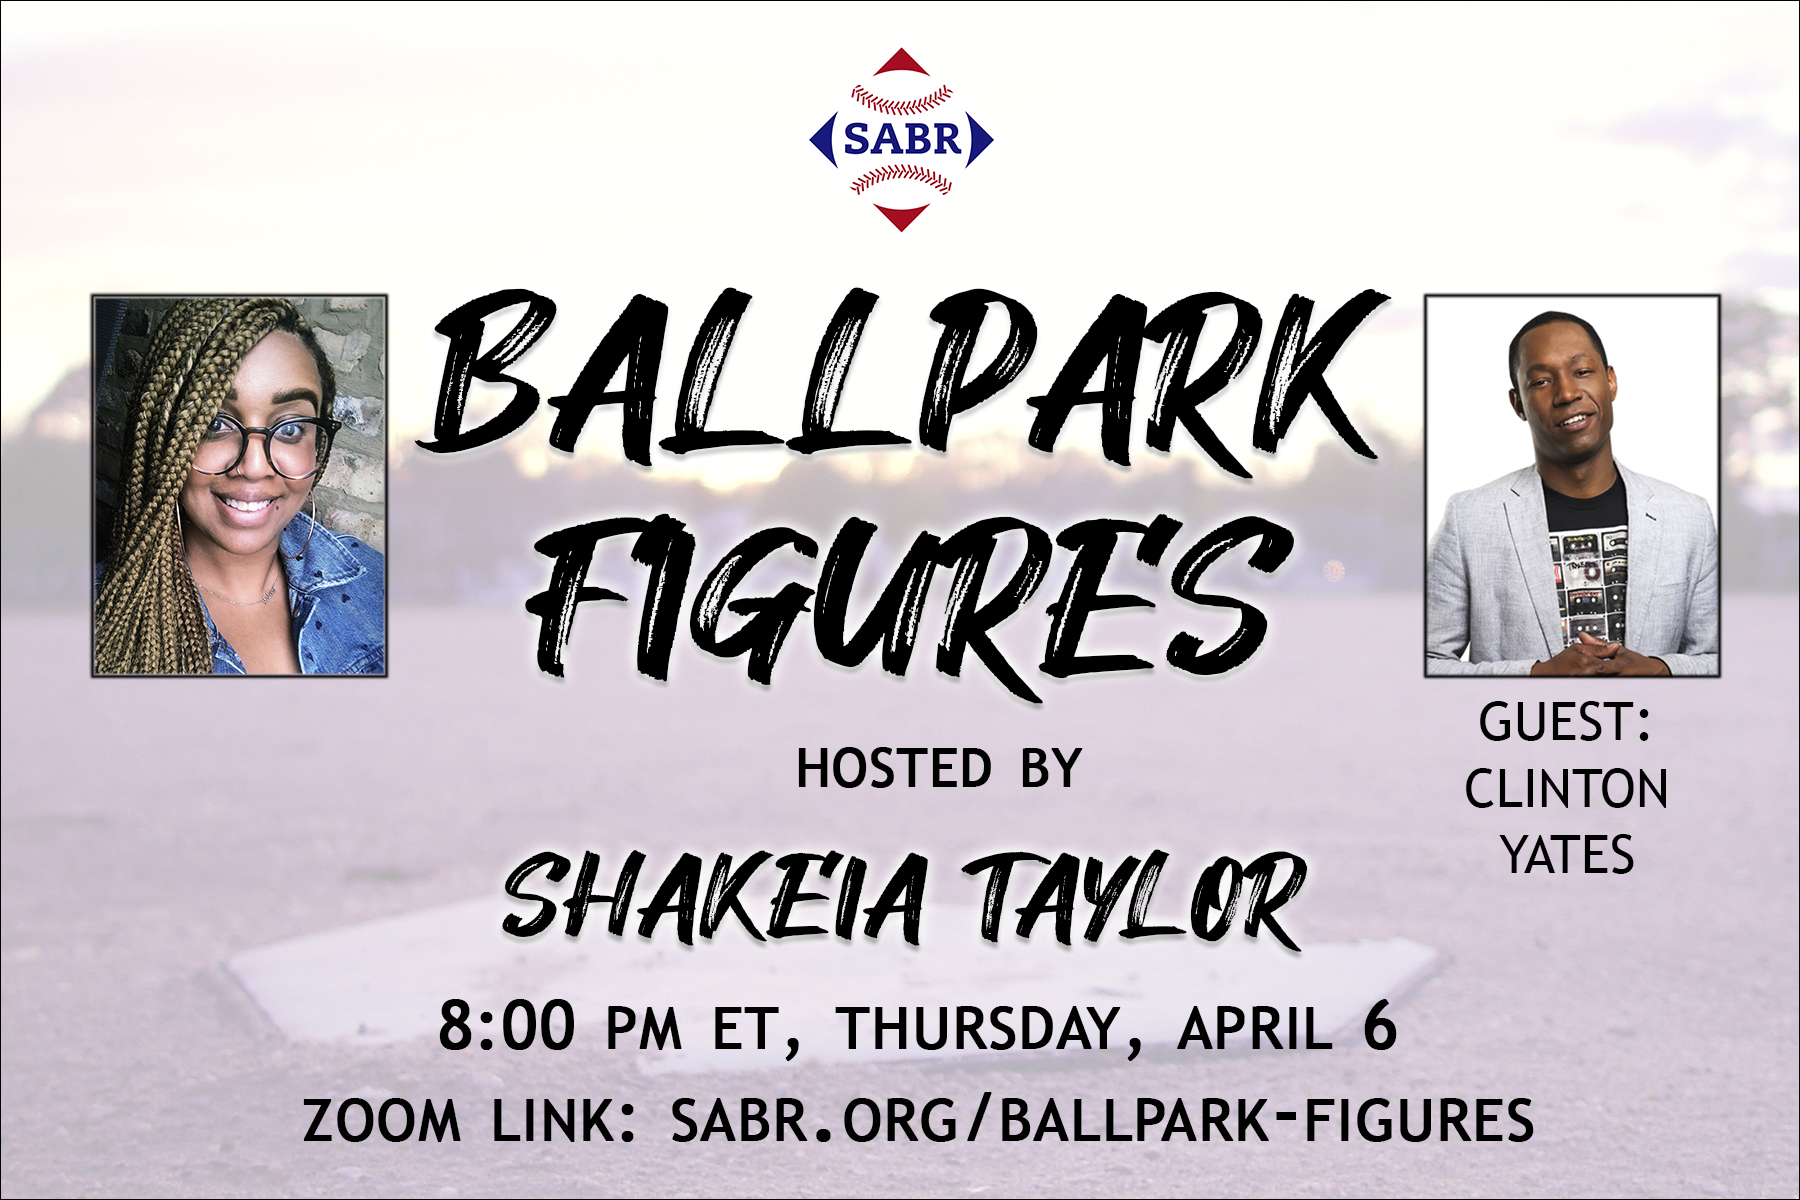 Ballpark Figures: Clinton Yates